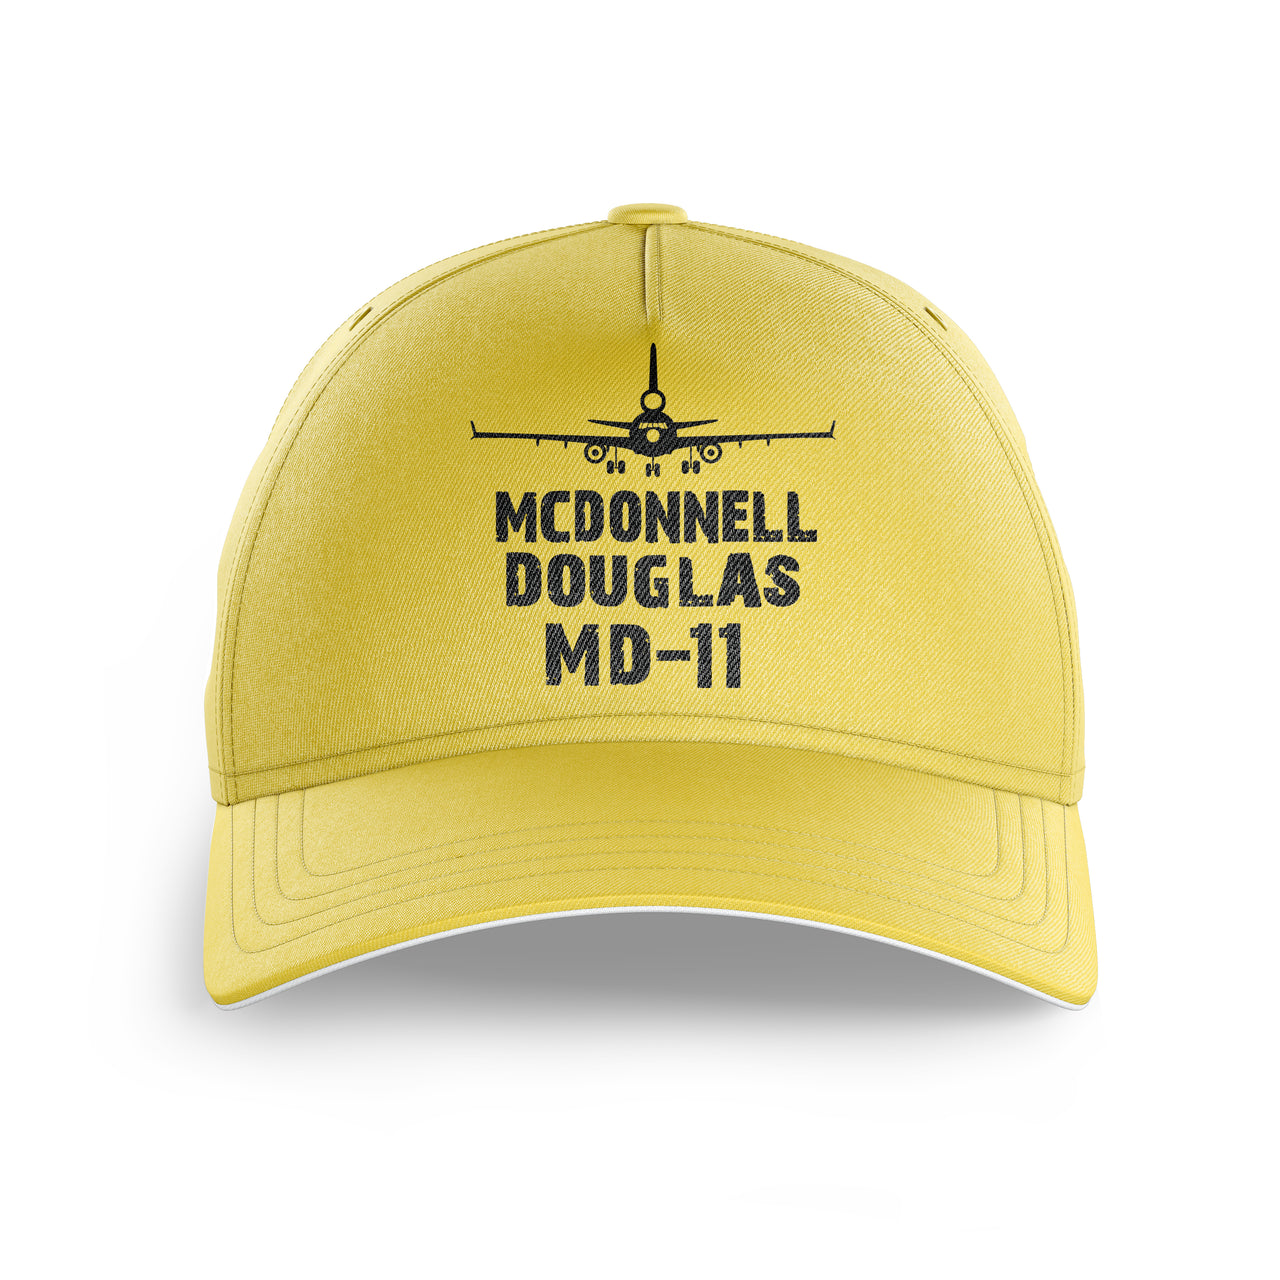 McDonnell Douglas MD-11 & Plane Printed Hats